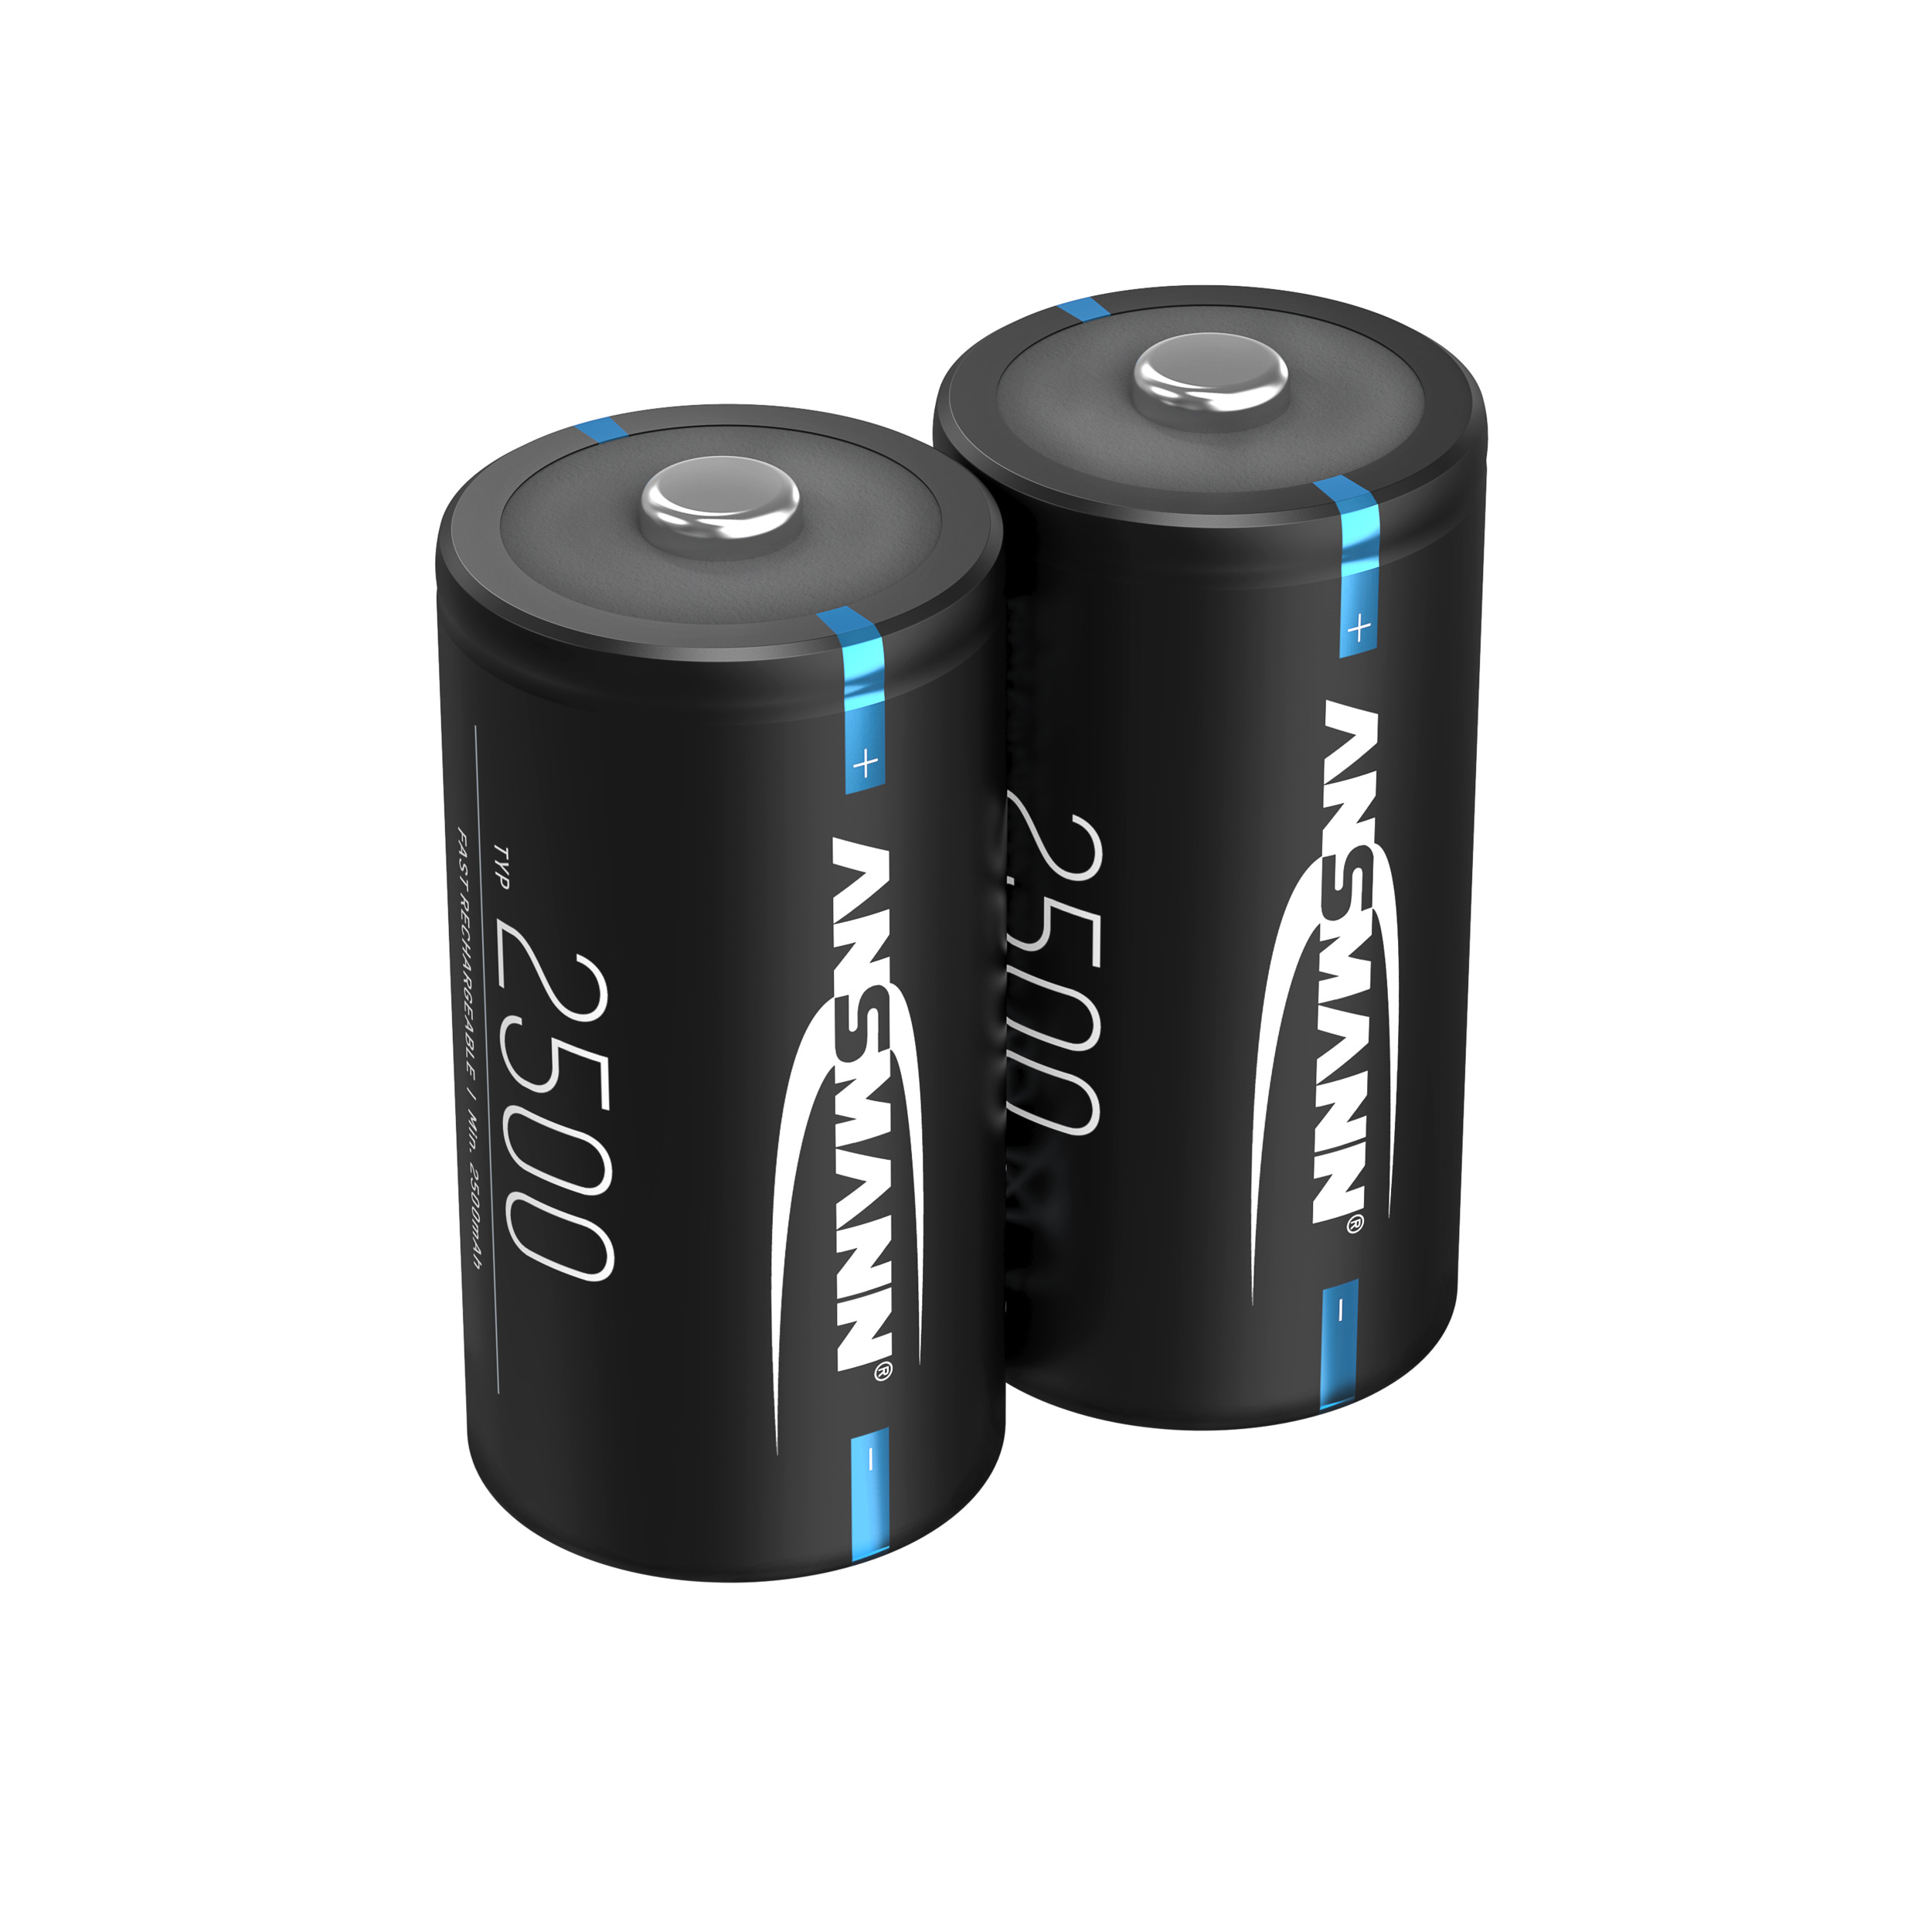 Black Nickel-Metallhydrid 2500 Batterie, wiederaufladbar Baby C C 2500 Akku Edition 1.2 (NiMH), Volt, ANSMANN mAh 2 Stück